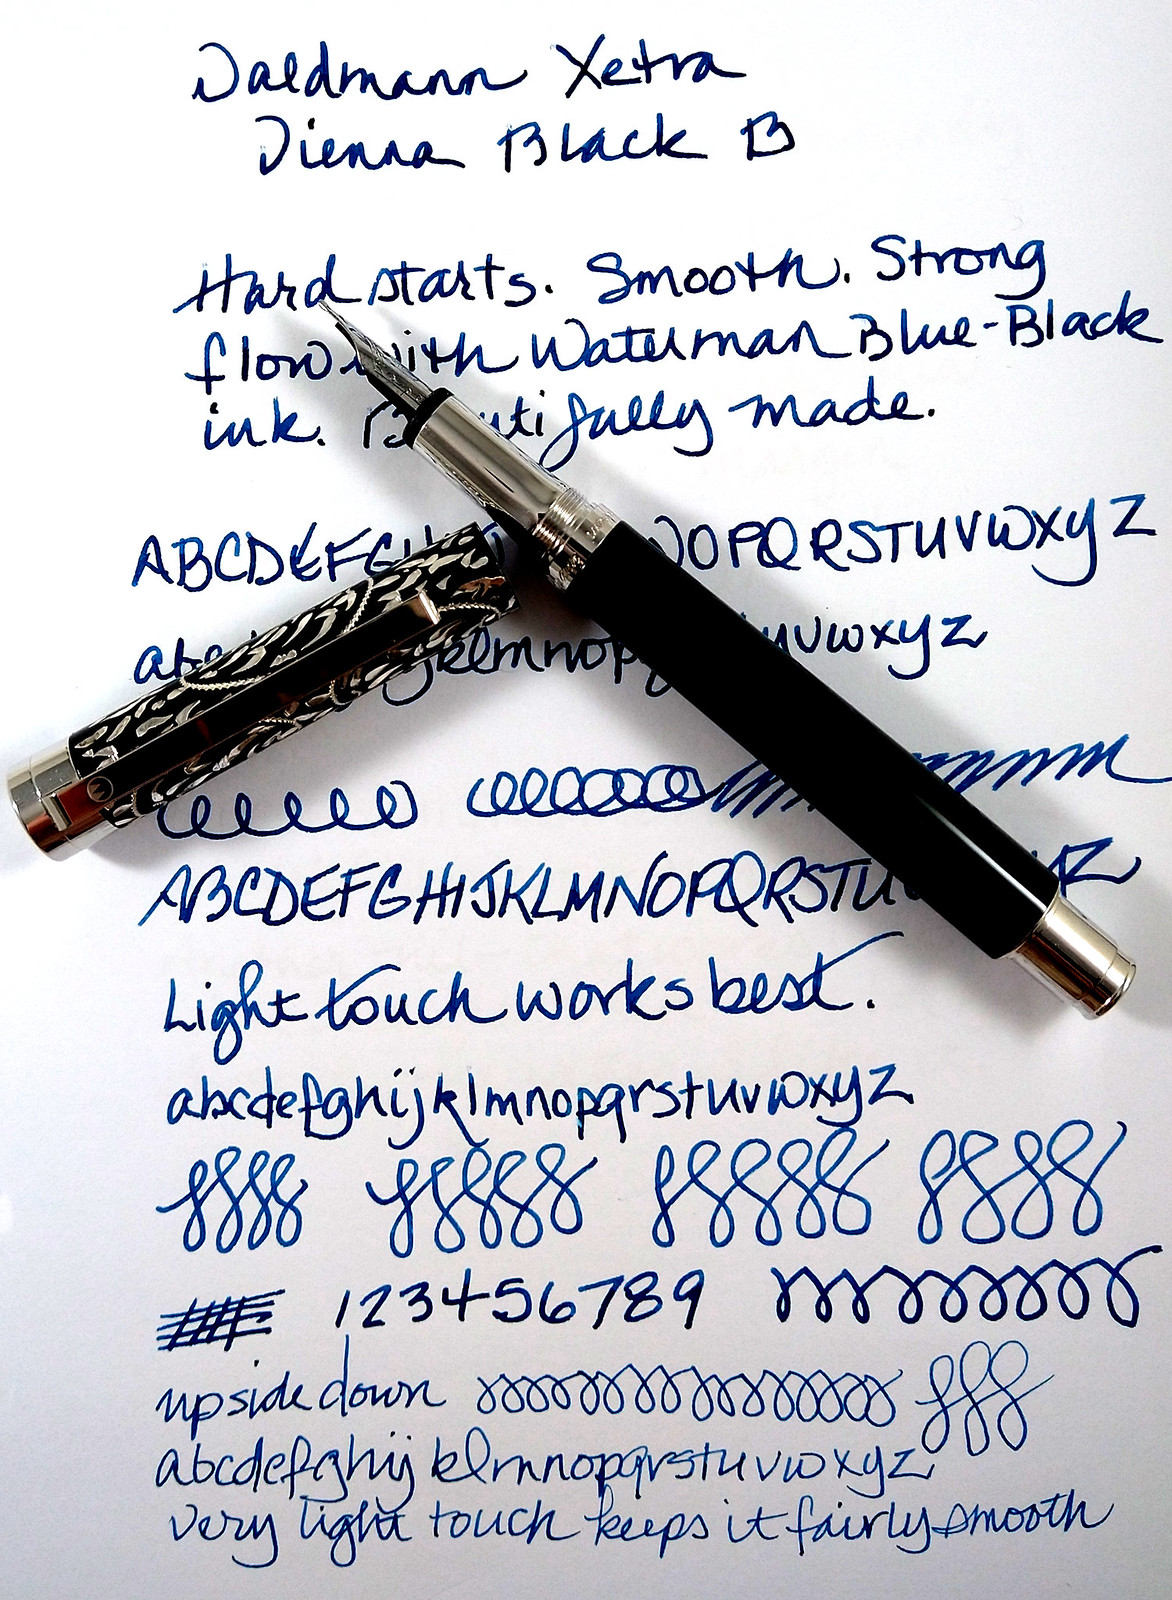 Waldmann Blue Ink Review & Giveaway - Pen Chalet